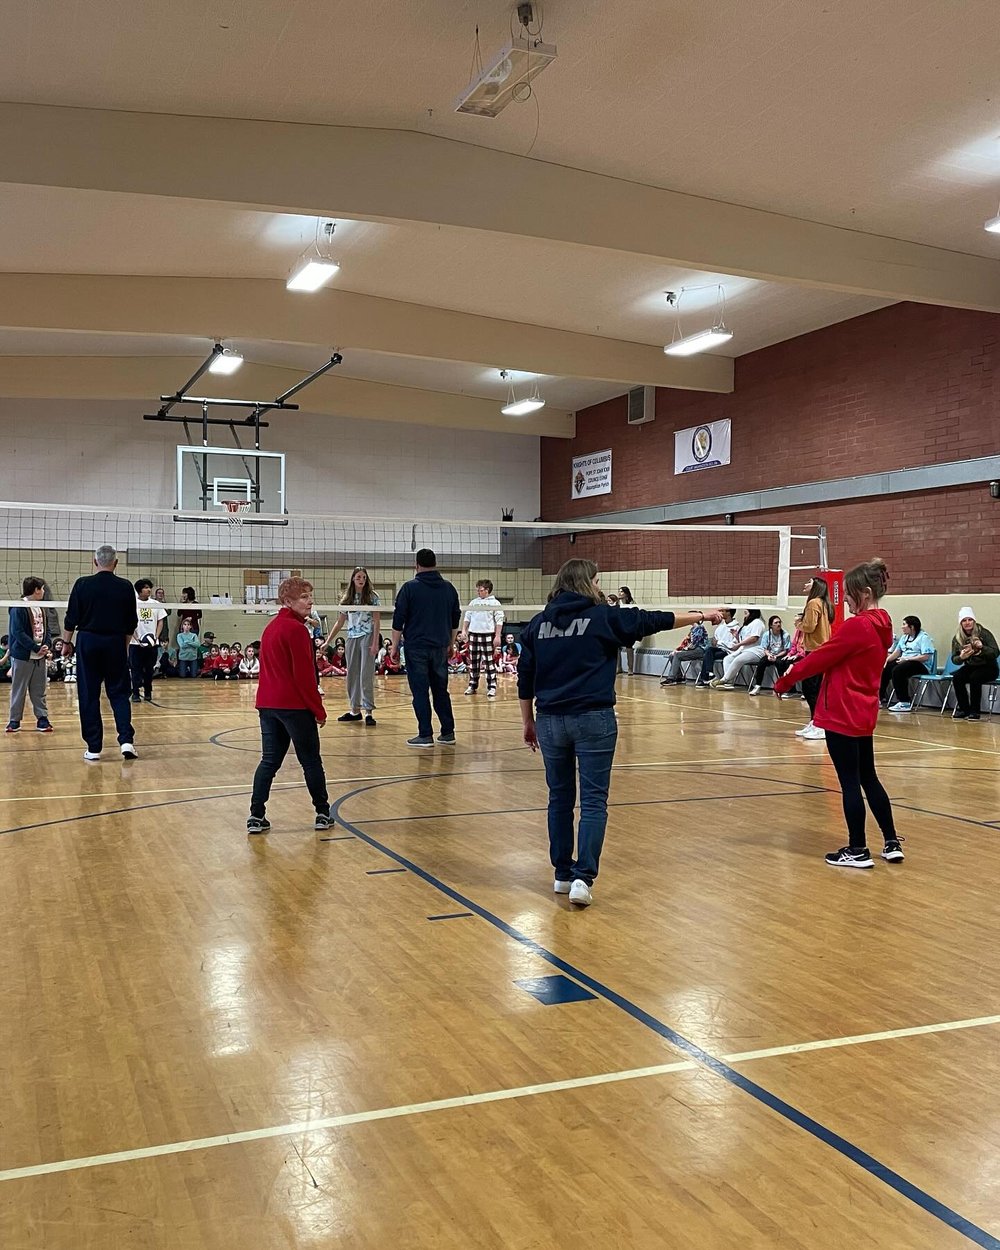 Teachers vs. Students volleyball at Assumption School, Spokane. 